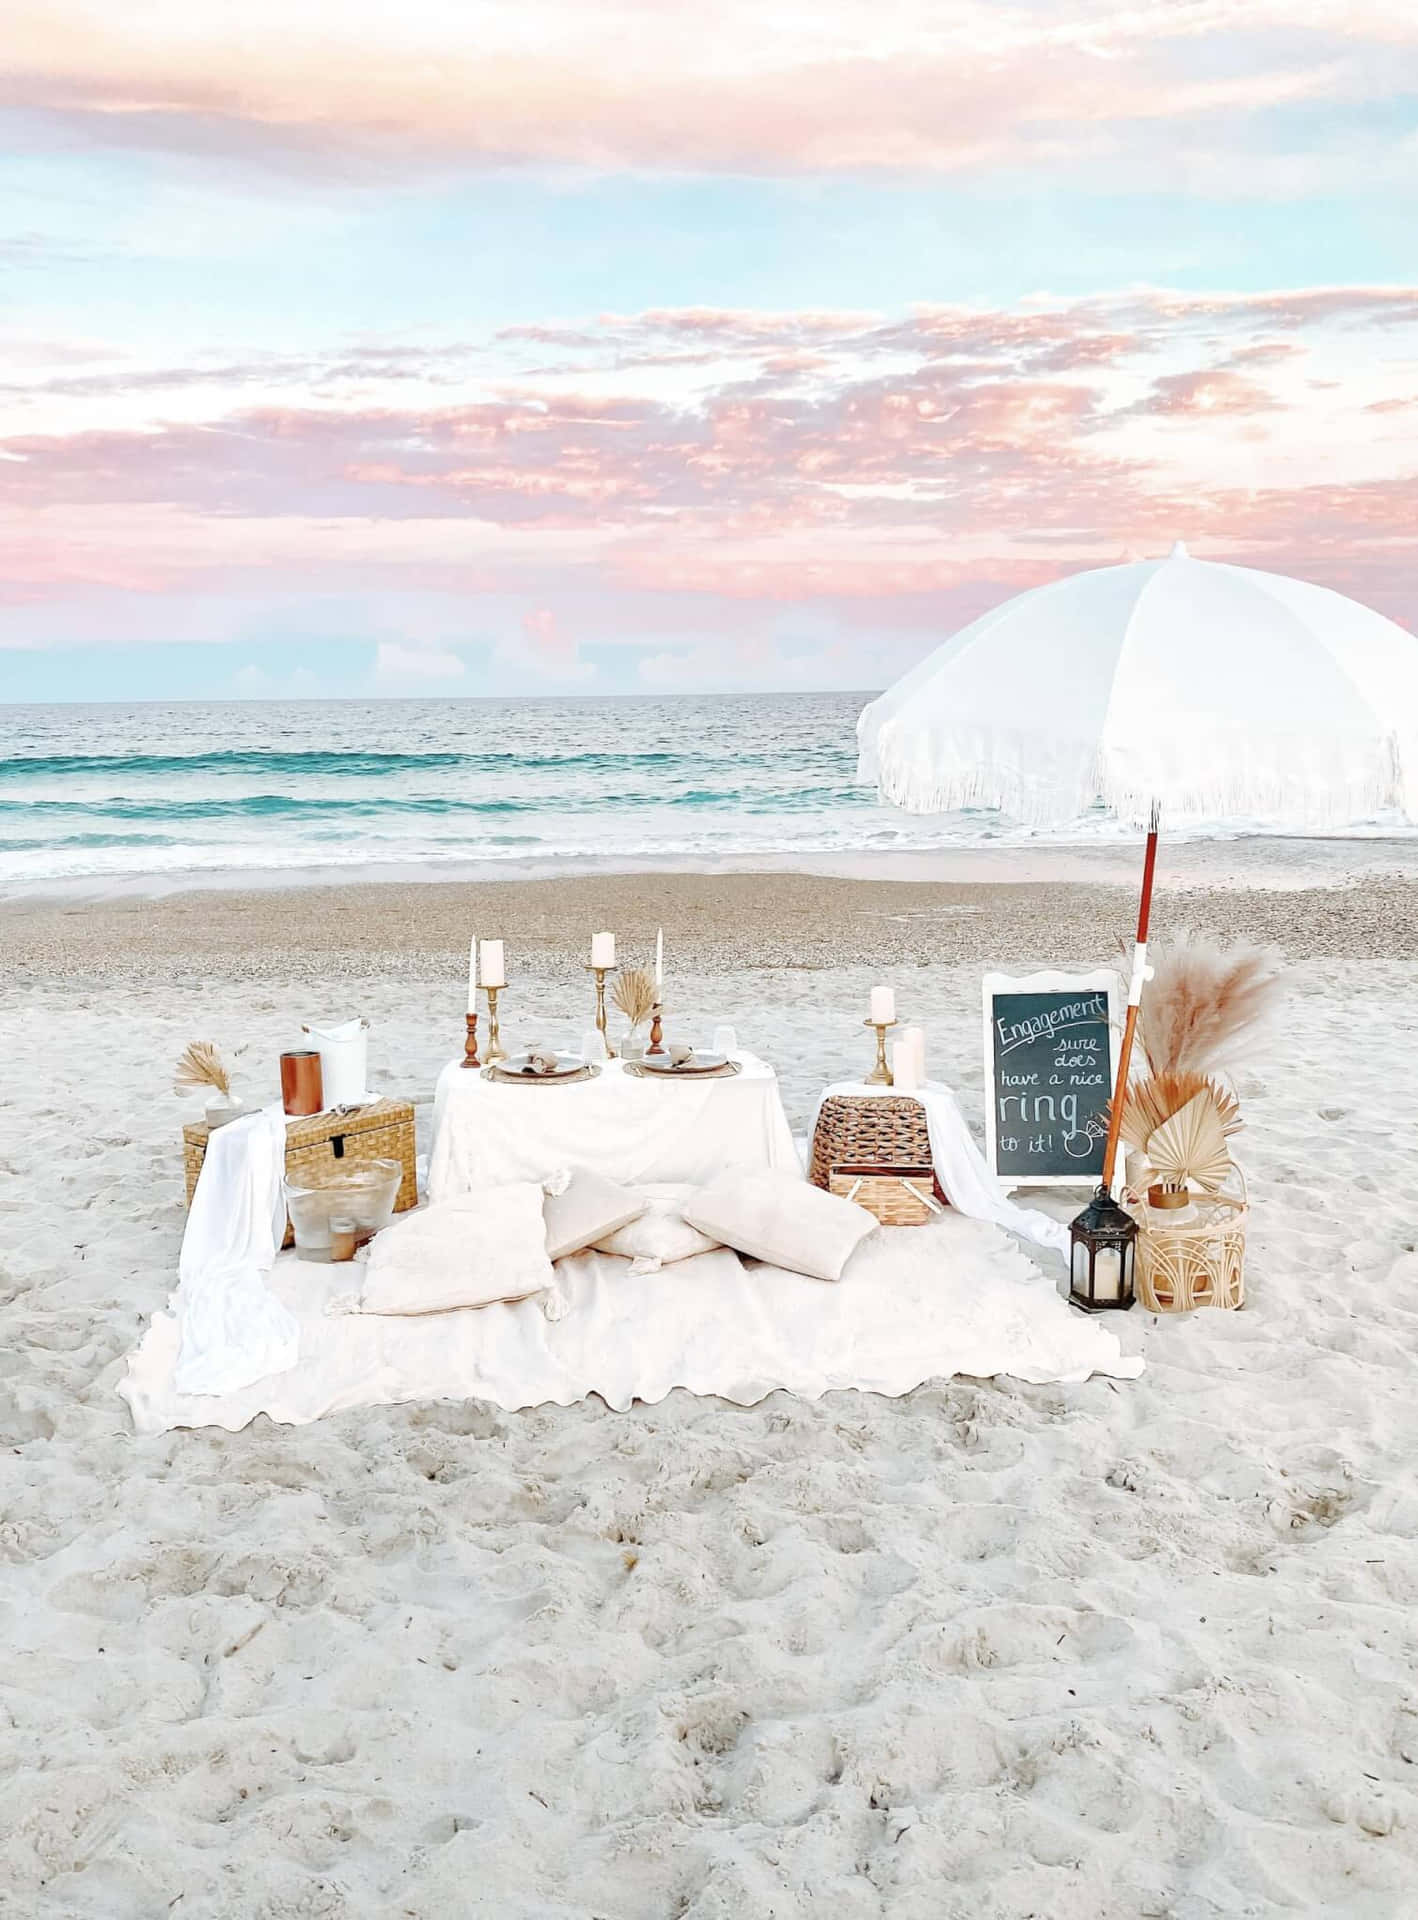 Tranquil Beach Picnic Setup Wallpaper